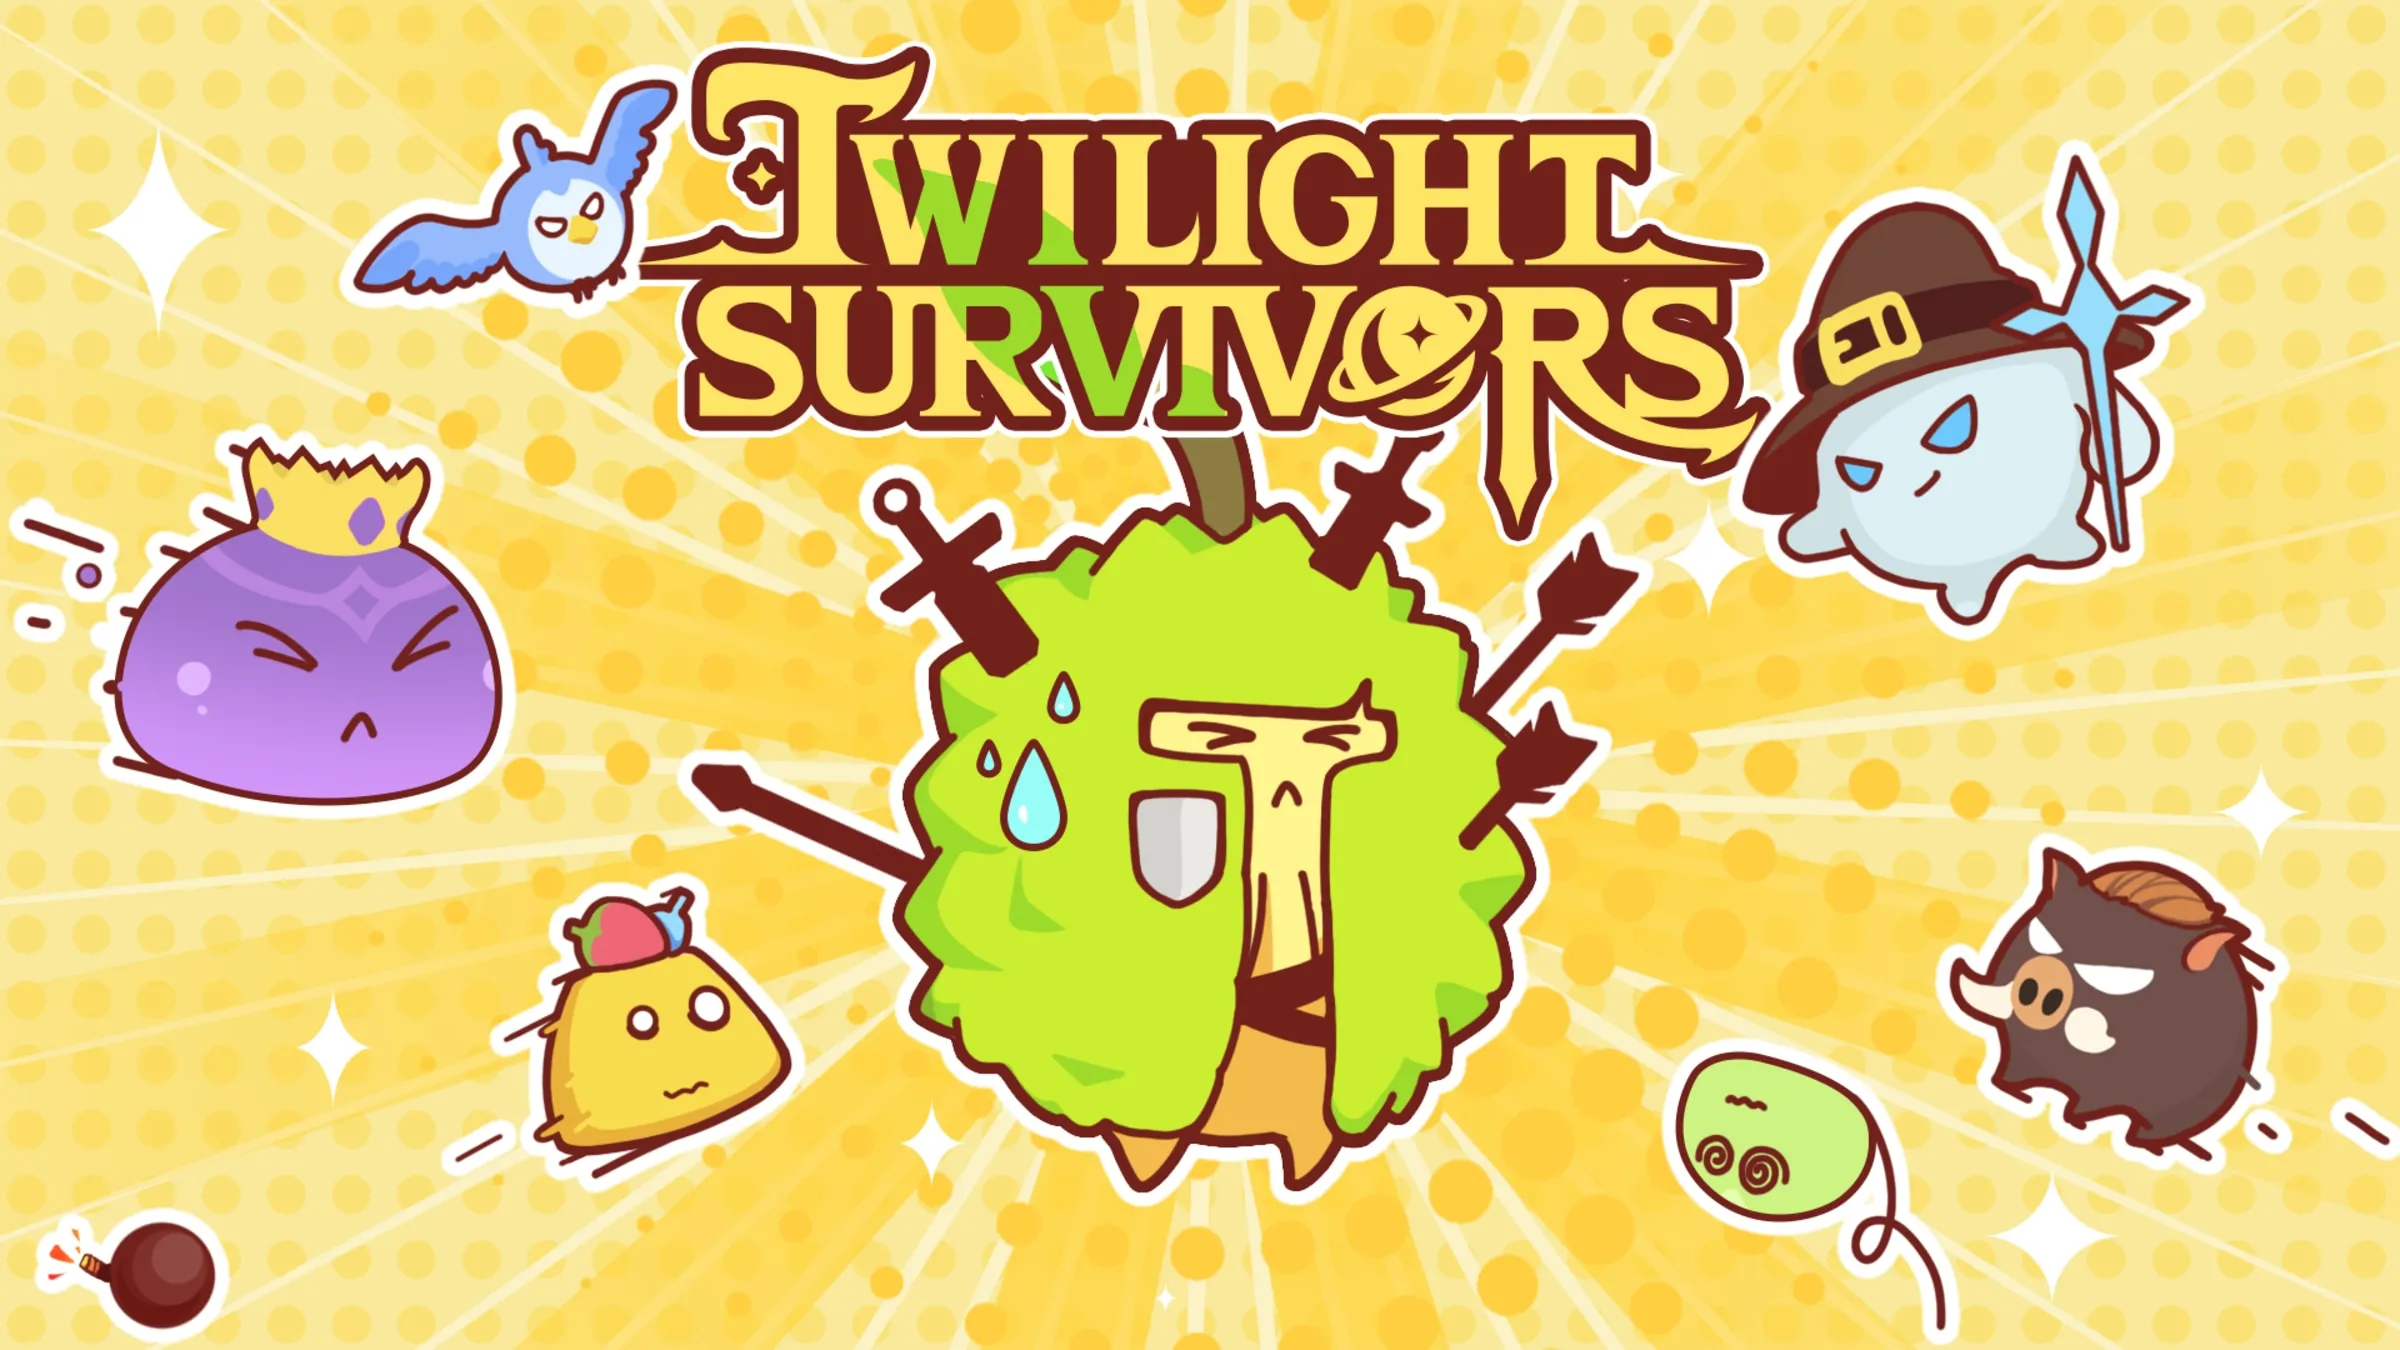 Twilight Survivors